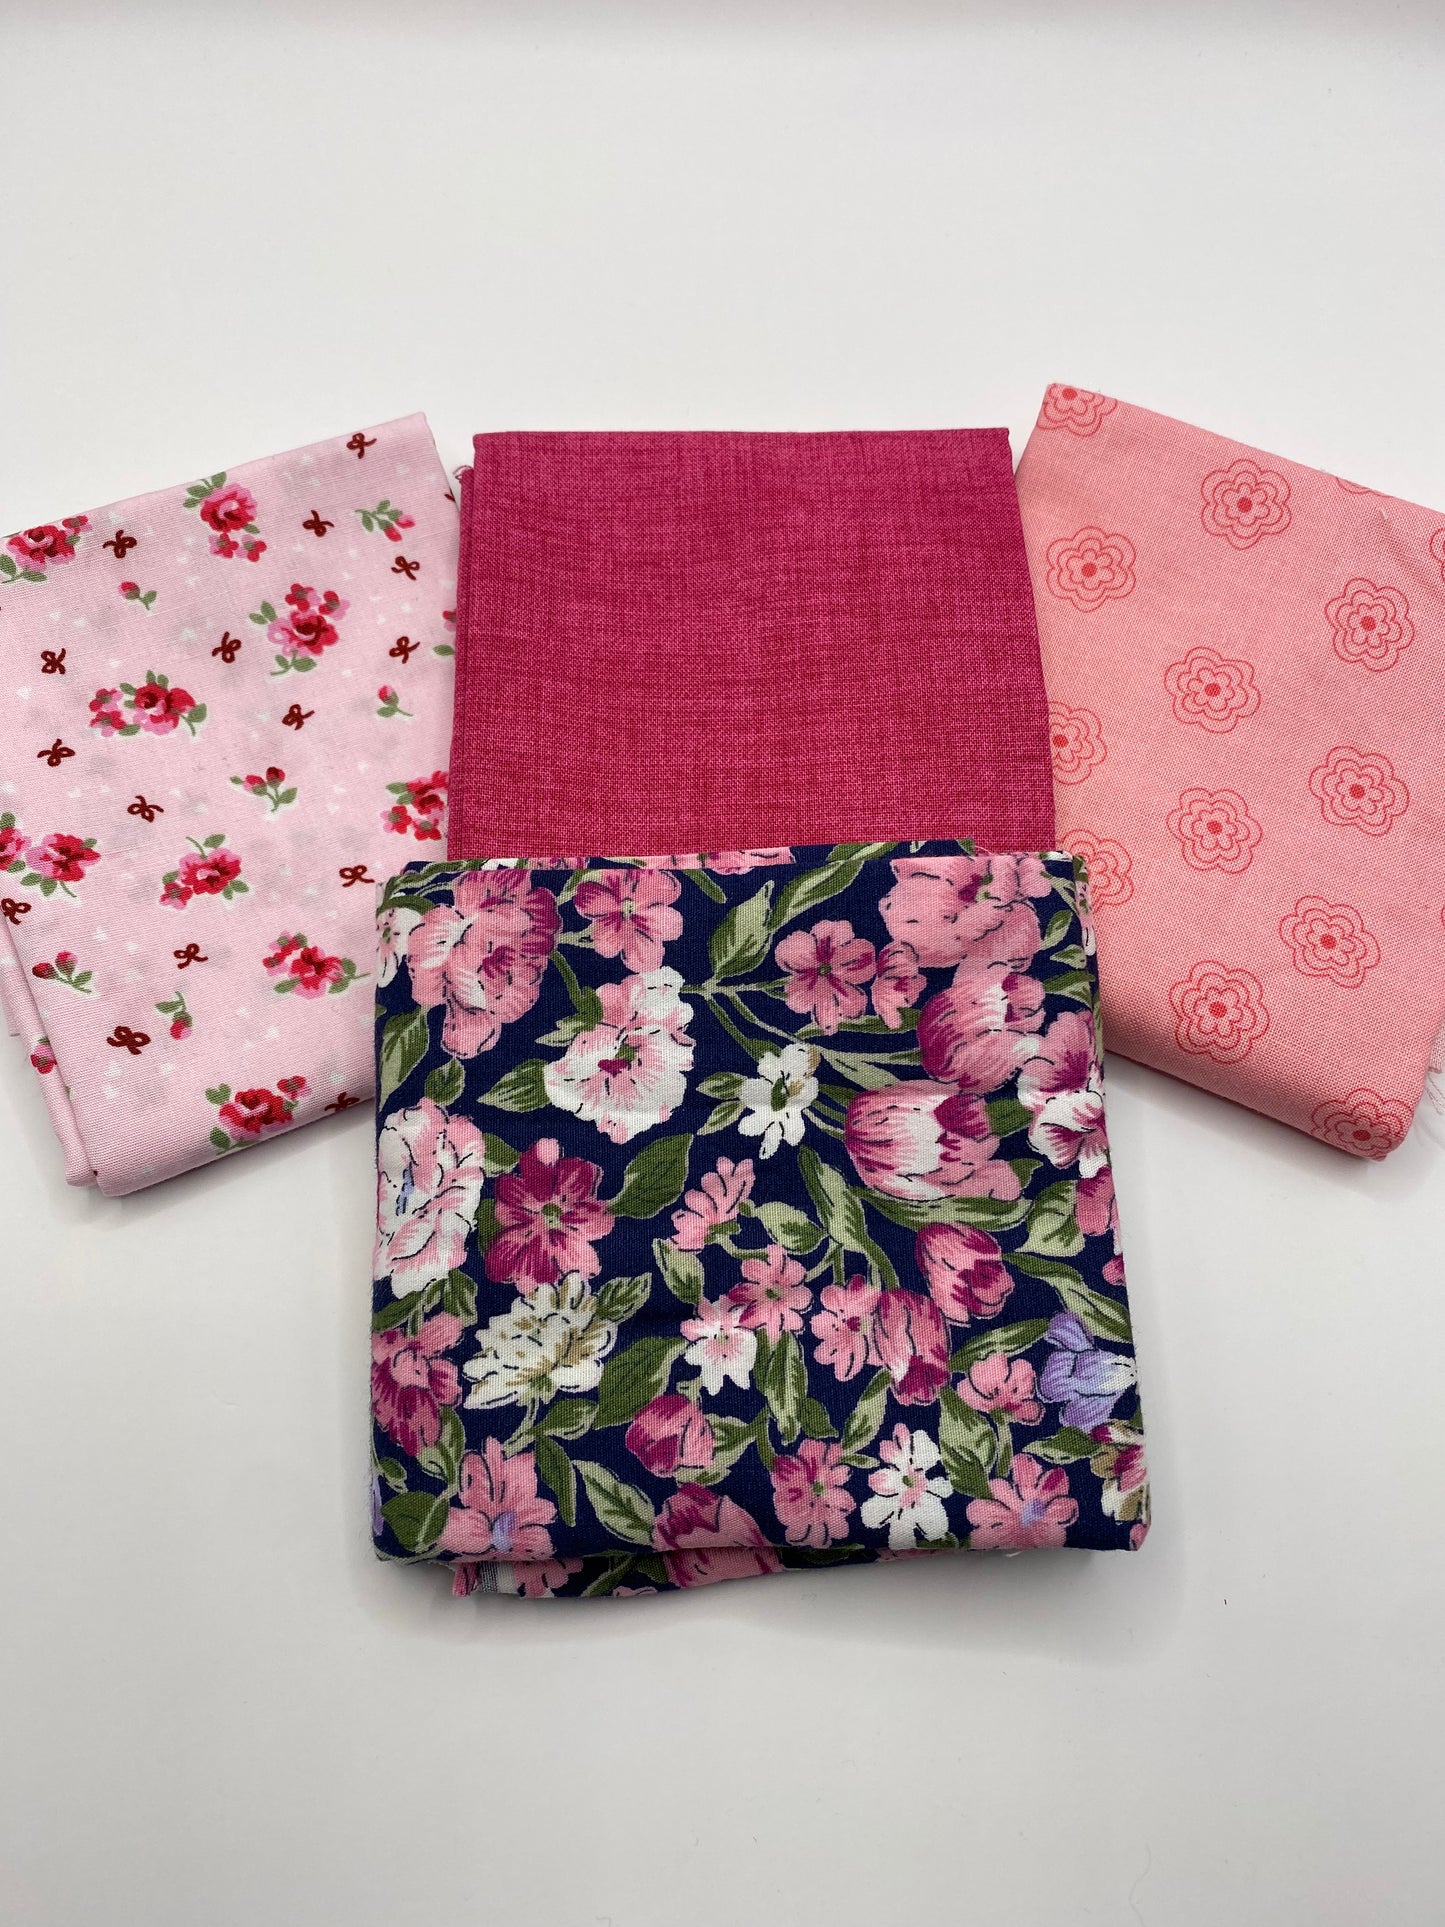 Fabric Fat Quarter Bundle - 'Warm Summer Pinks' - 100% Cotton